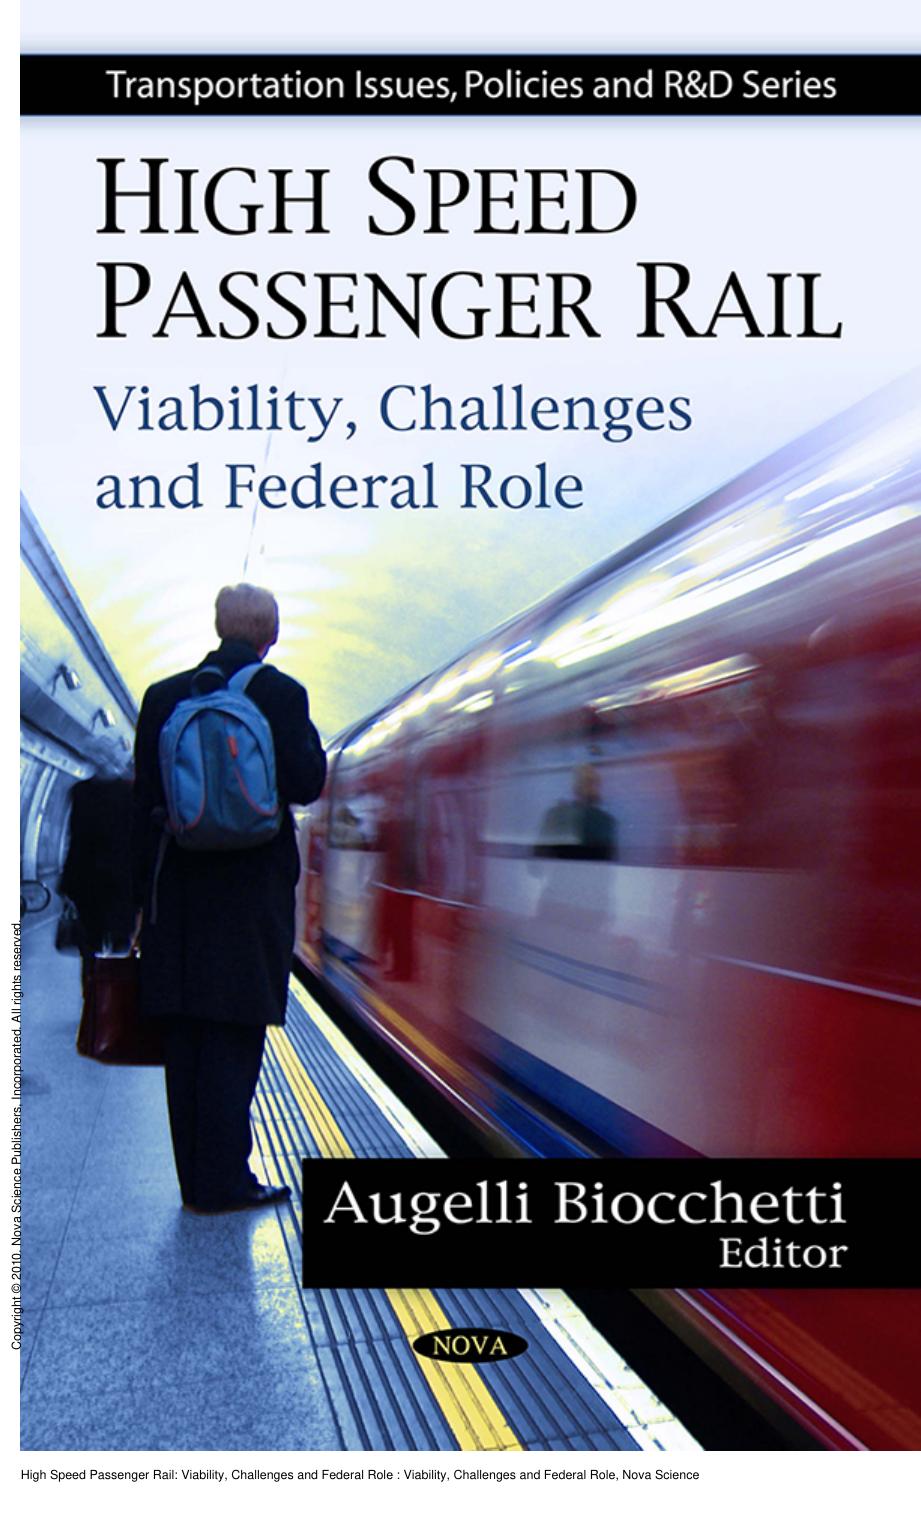 High Speed Passenger Rail: Viability, Challenges and Federal Role : Viability, Challenges and Federal Role by Augelli Biocchetti